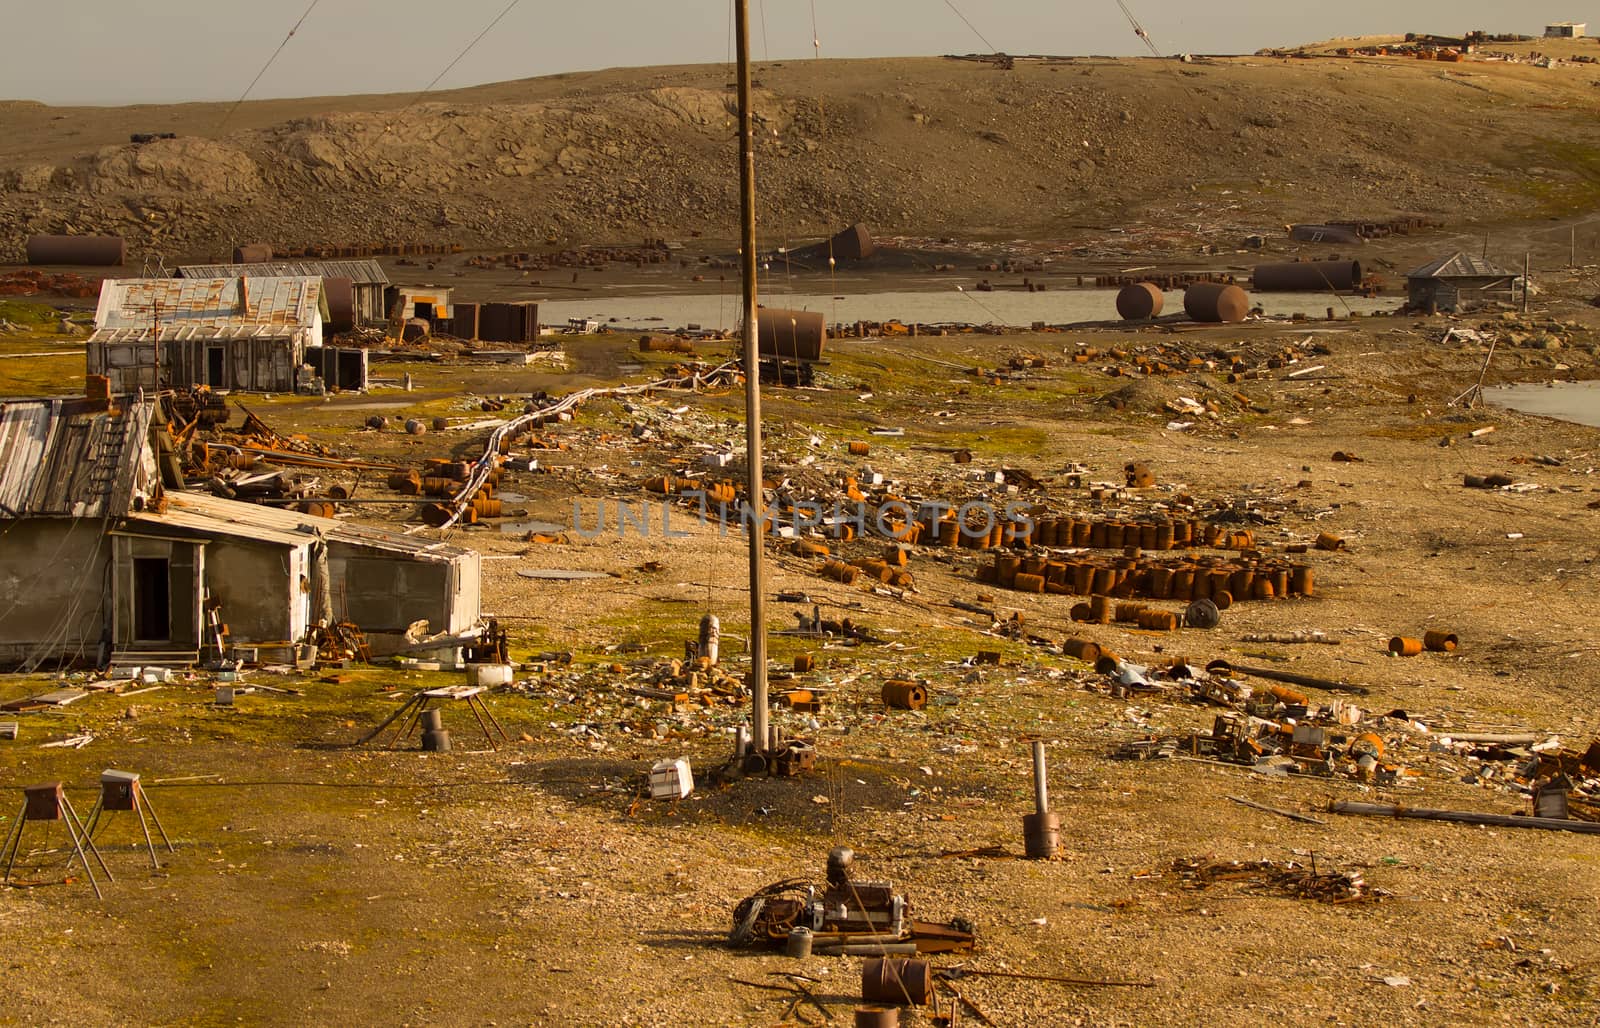 ollapsing polar station in the North island, the island of Novaya Zemlya. A large number of abandoned barrels of fuel